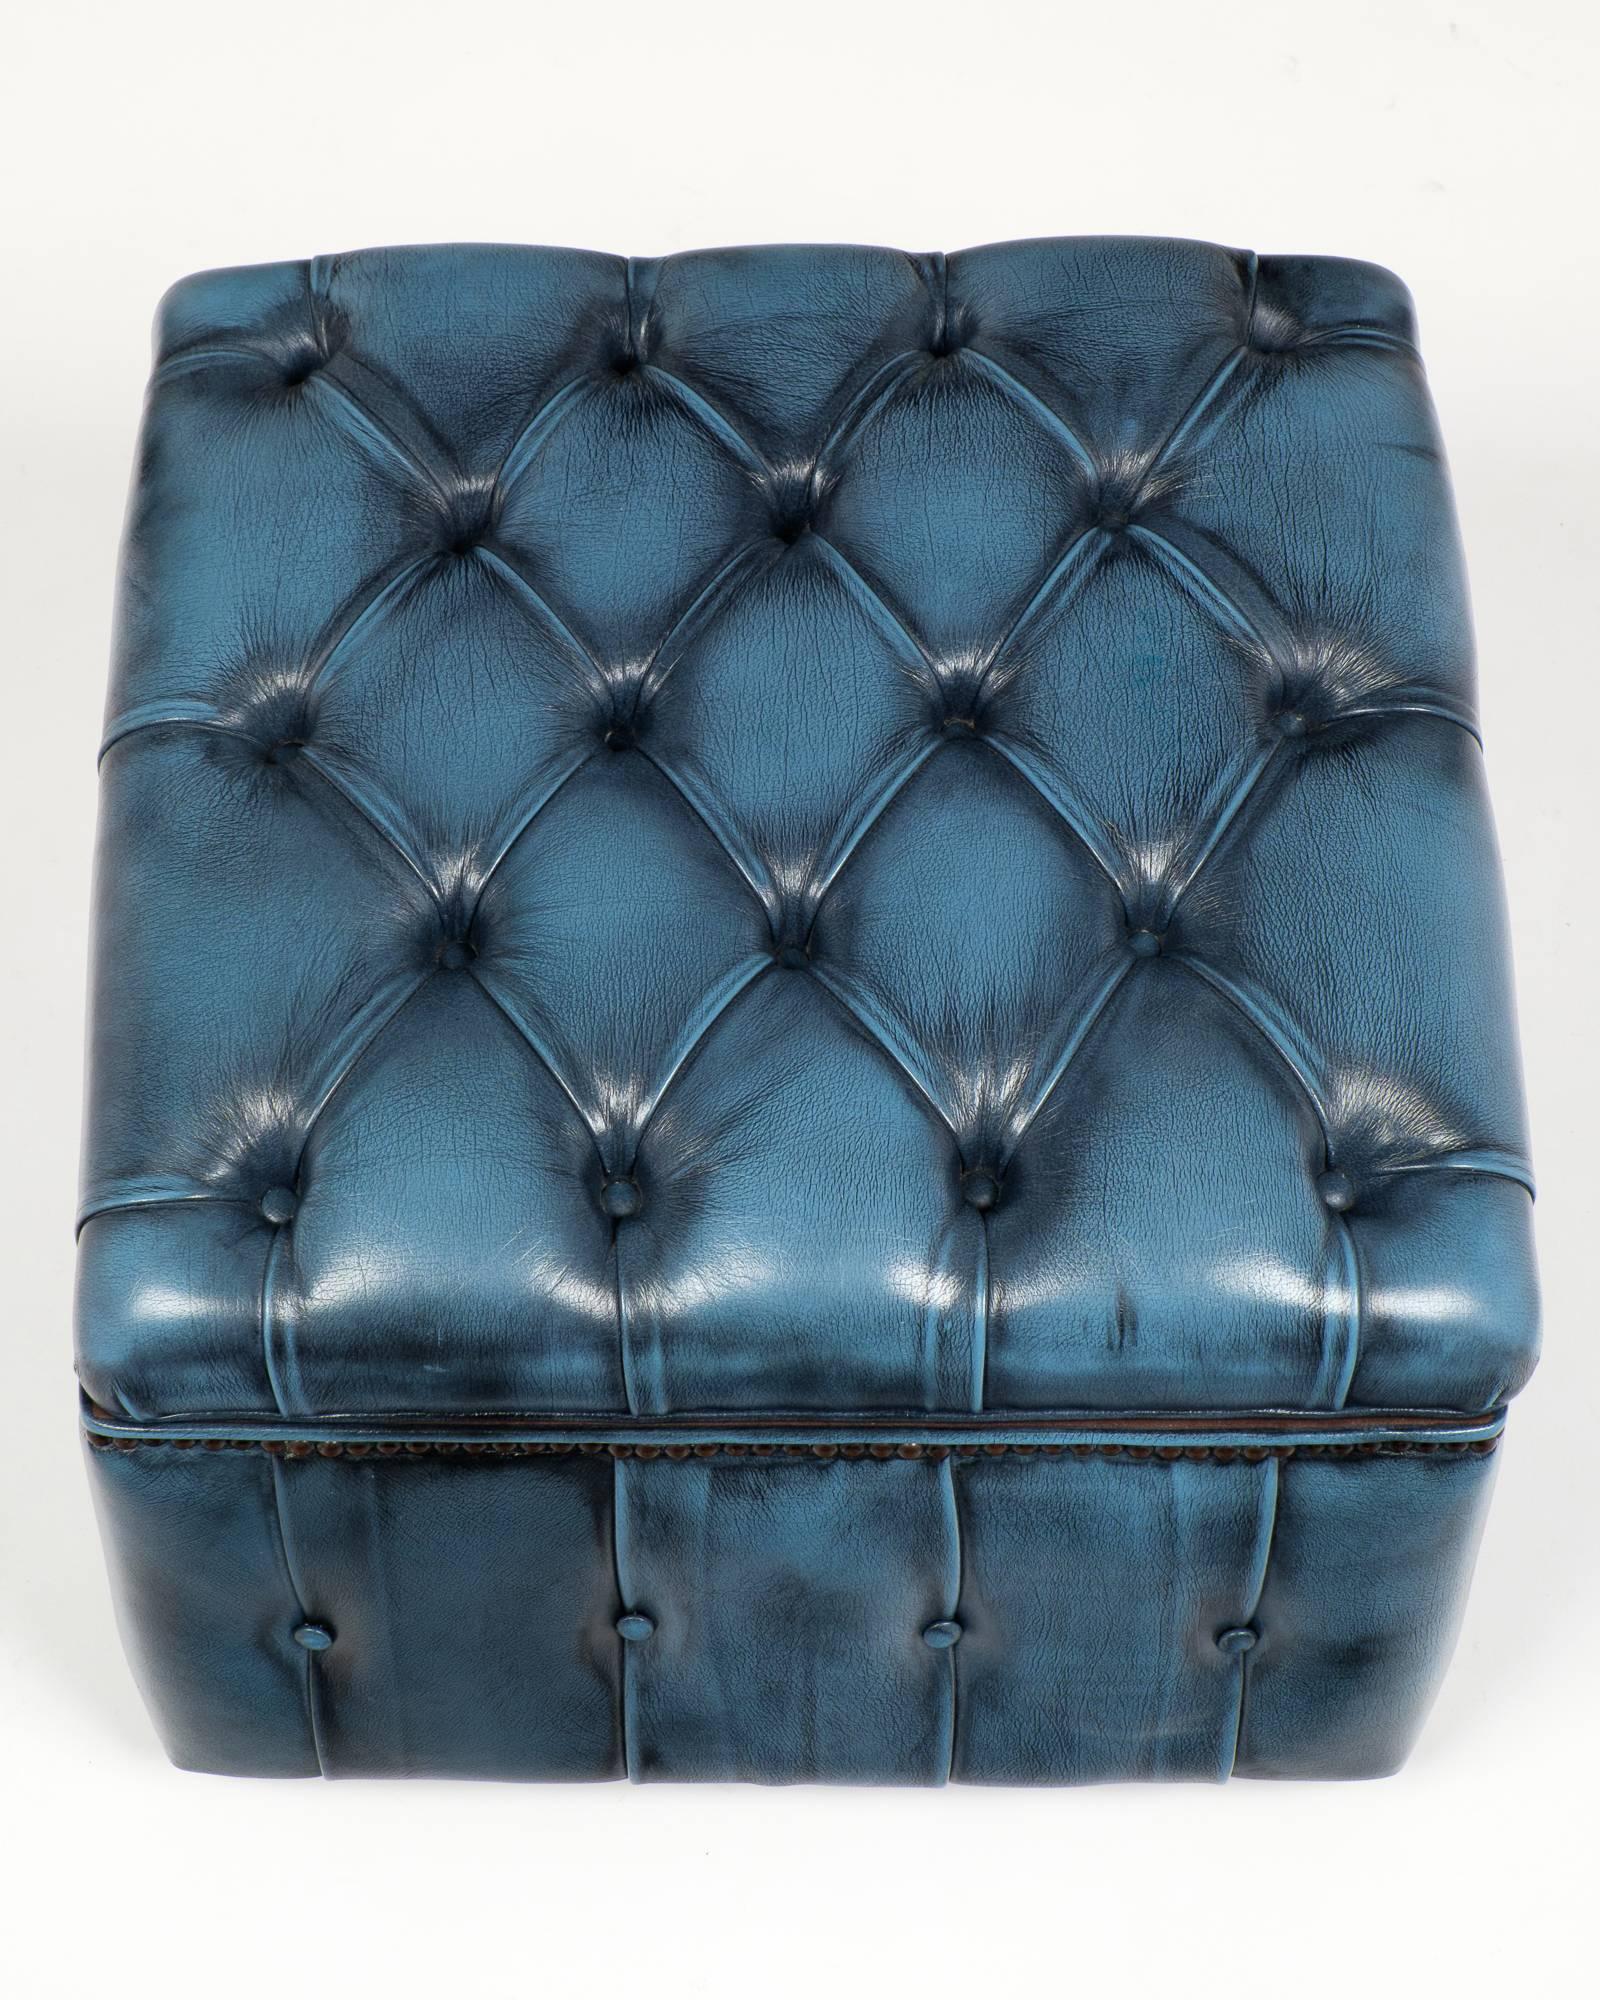 blue leather storage ottoman